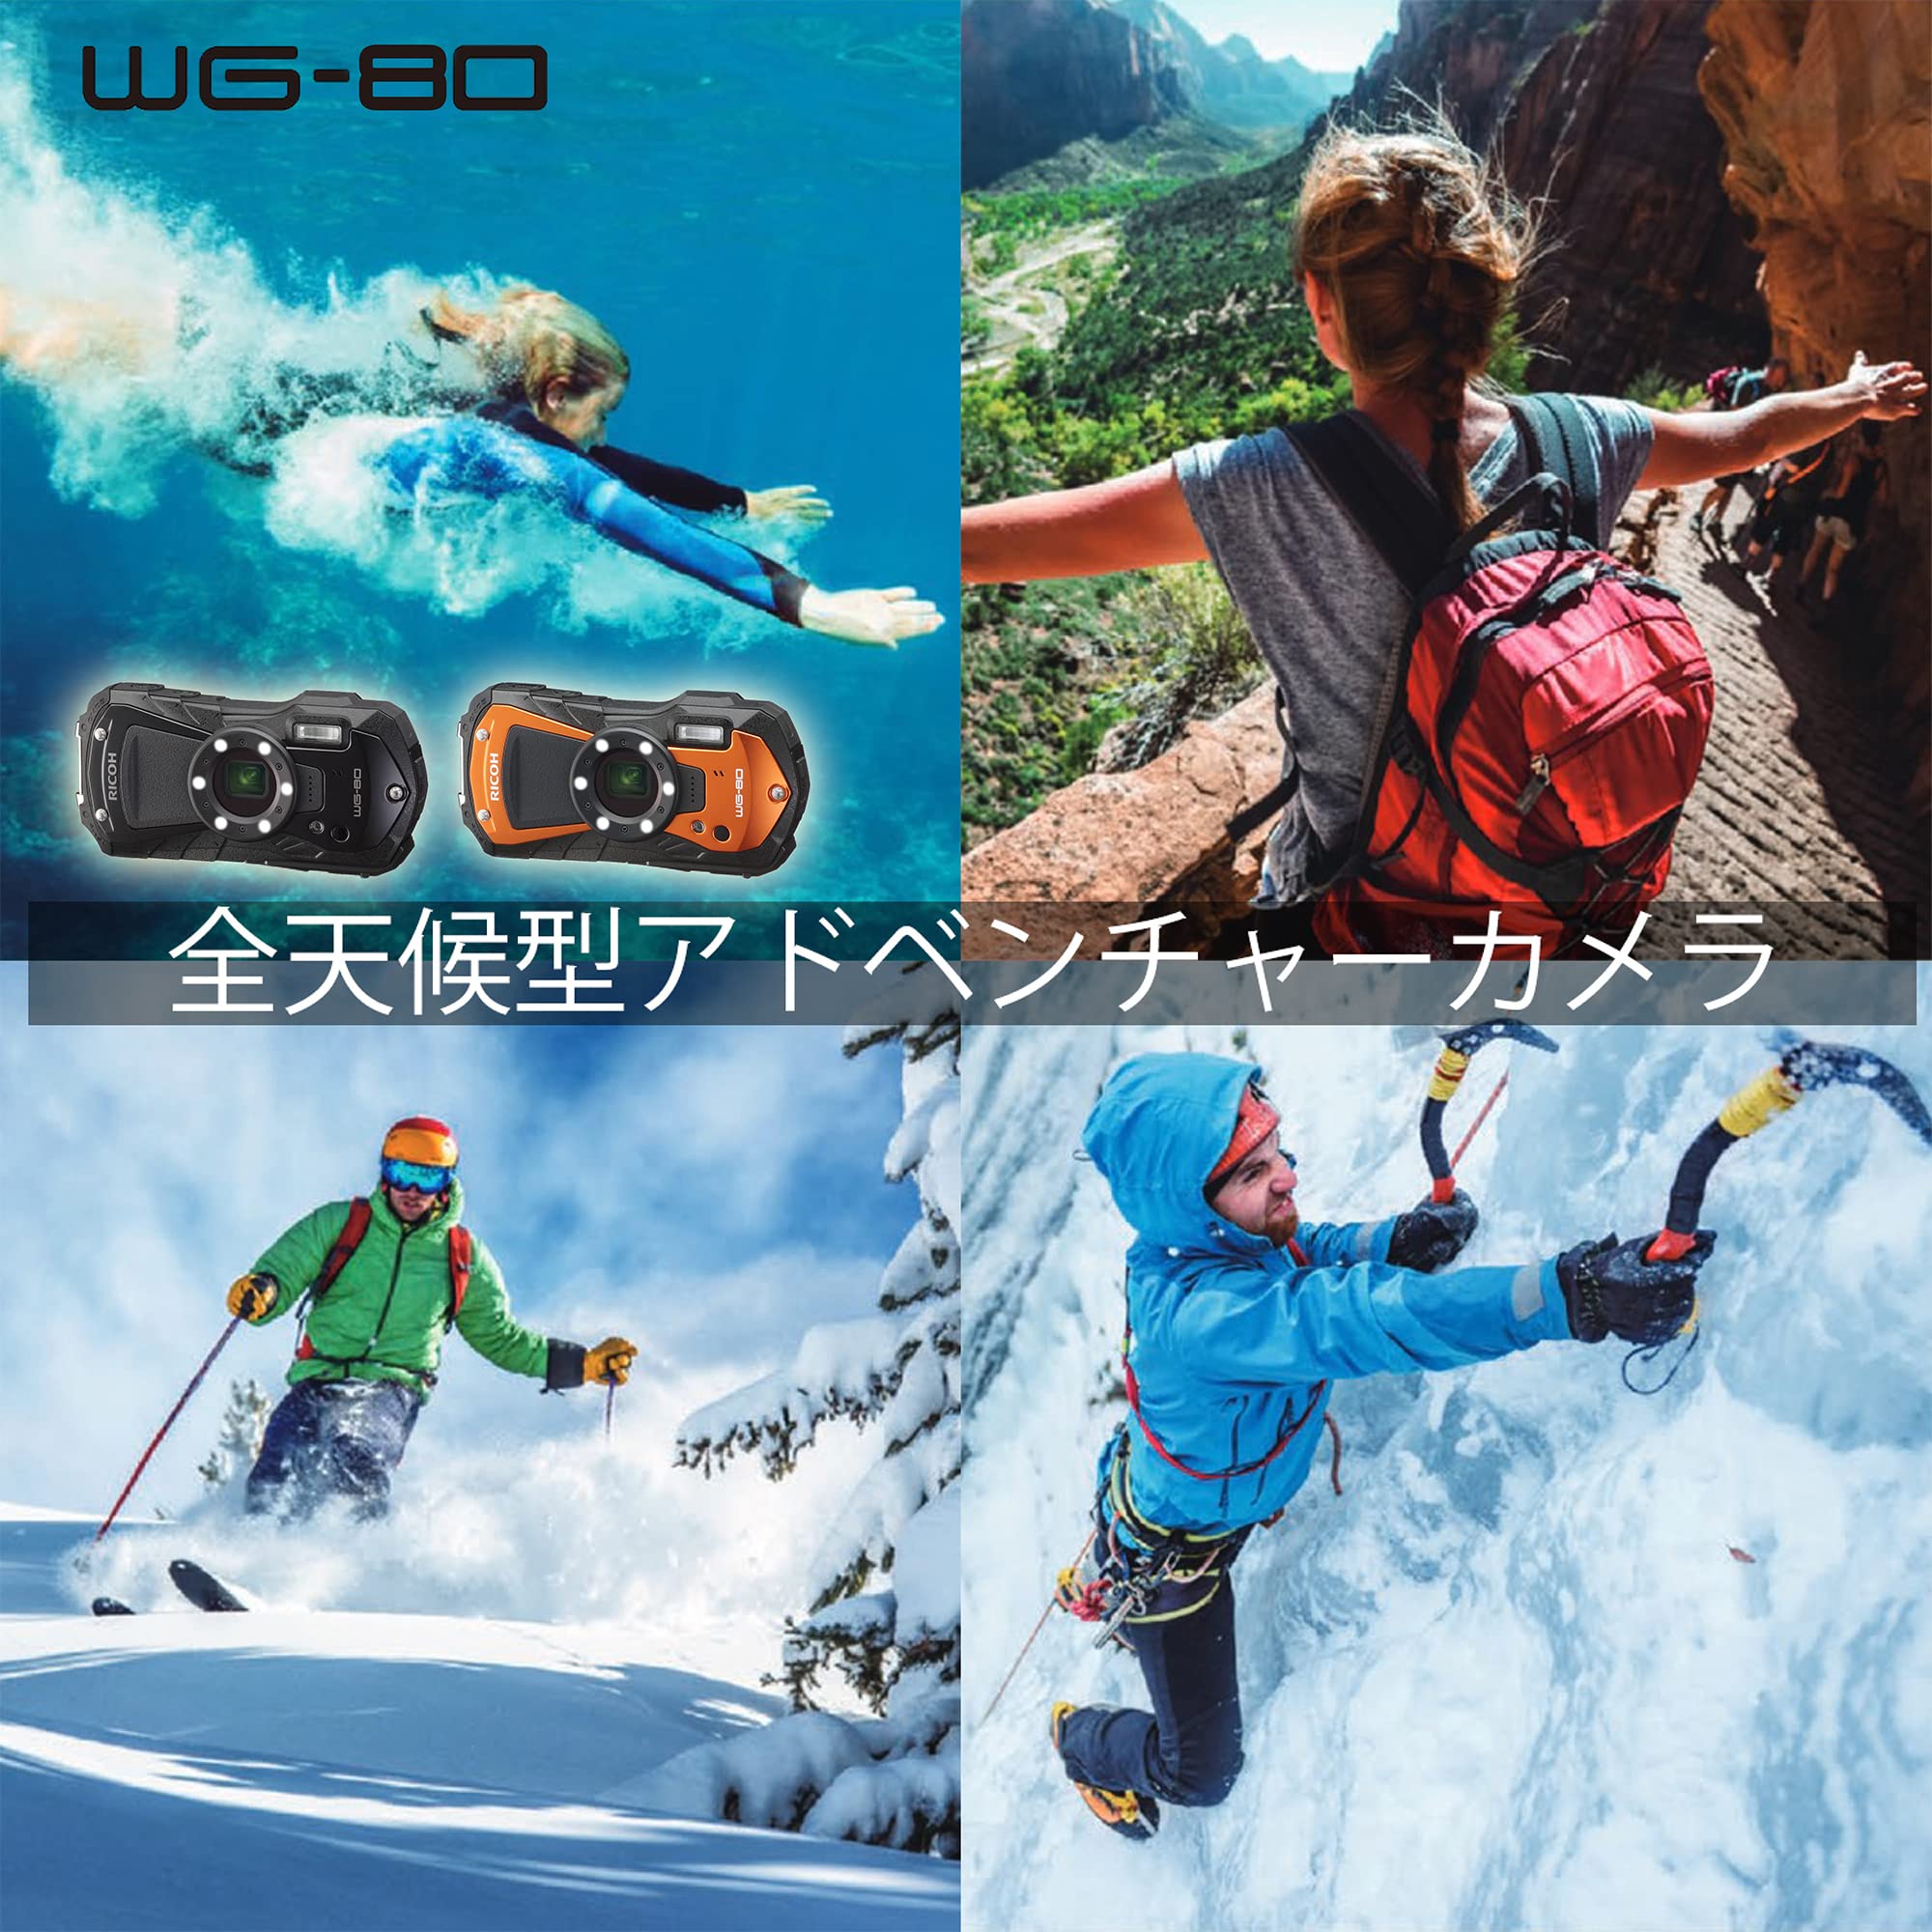 Ricoh WG-80 Black Waterproof Digital Camera Shockproof Freezeproof Crushproof (International Version)